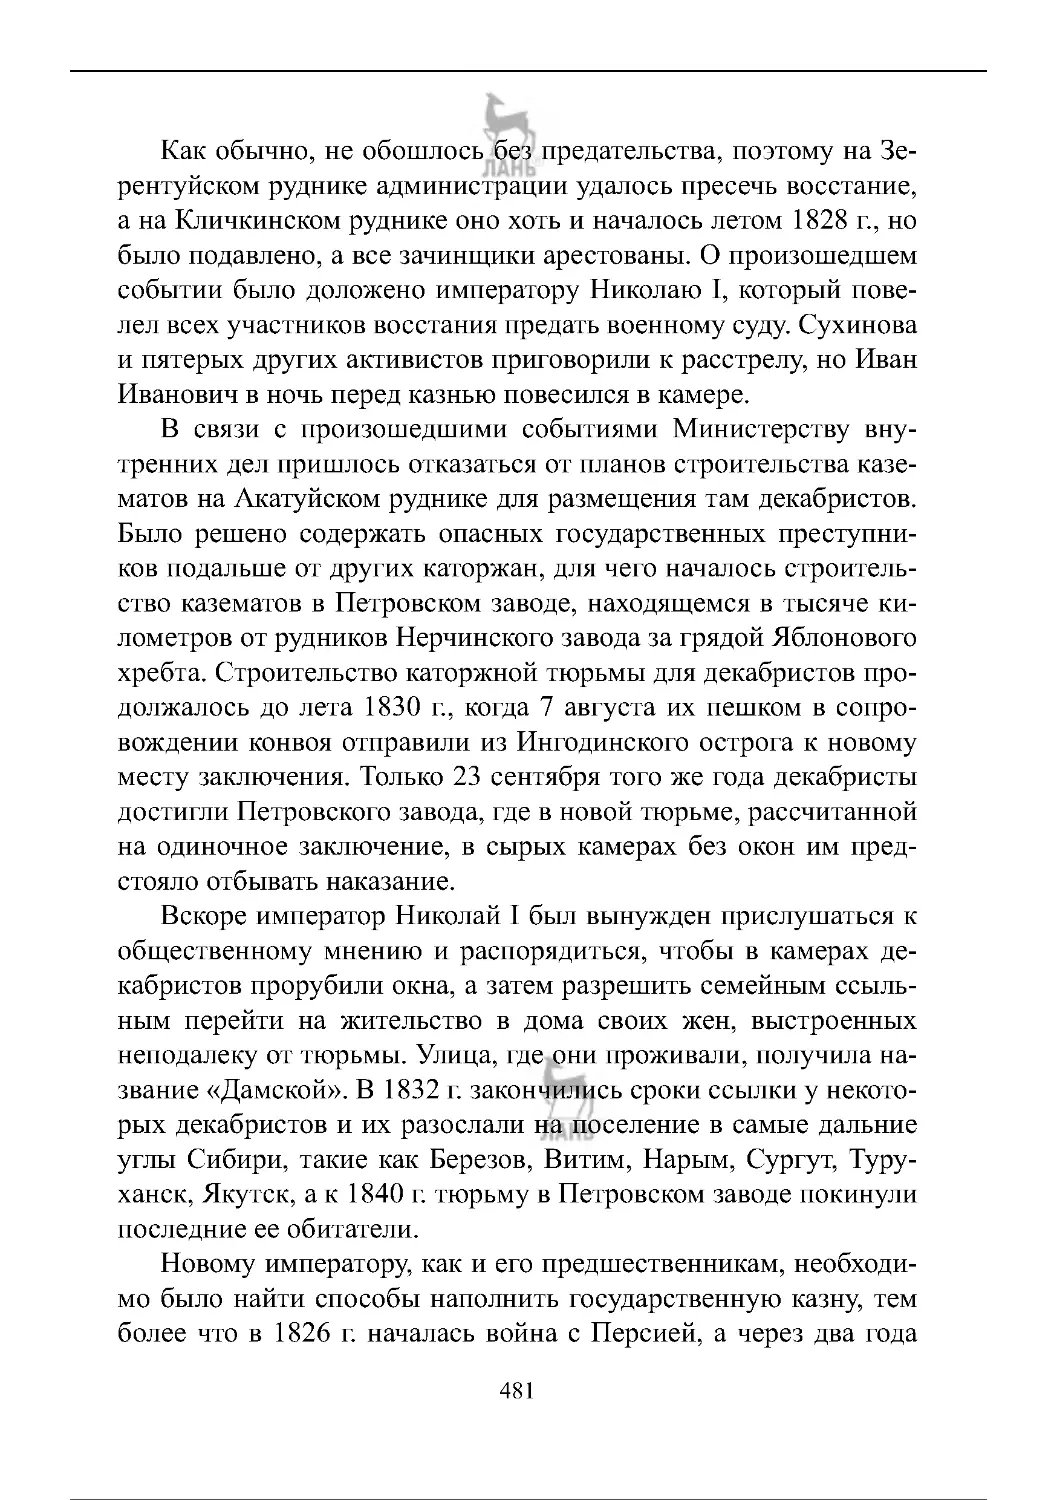 istoria_zavoevania_i_kolonizacii_sibiri_481-540